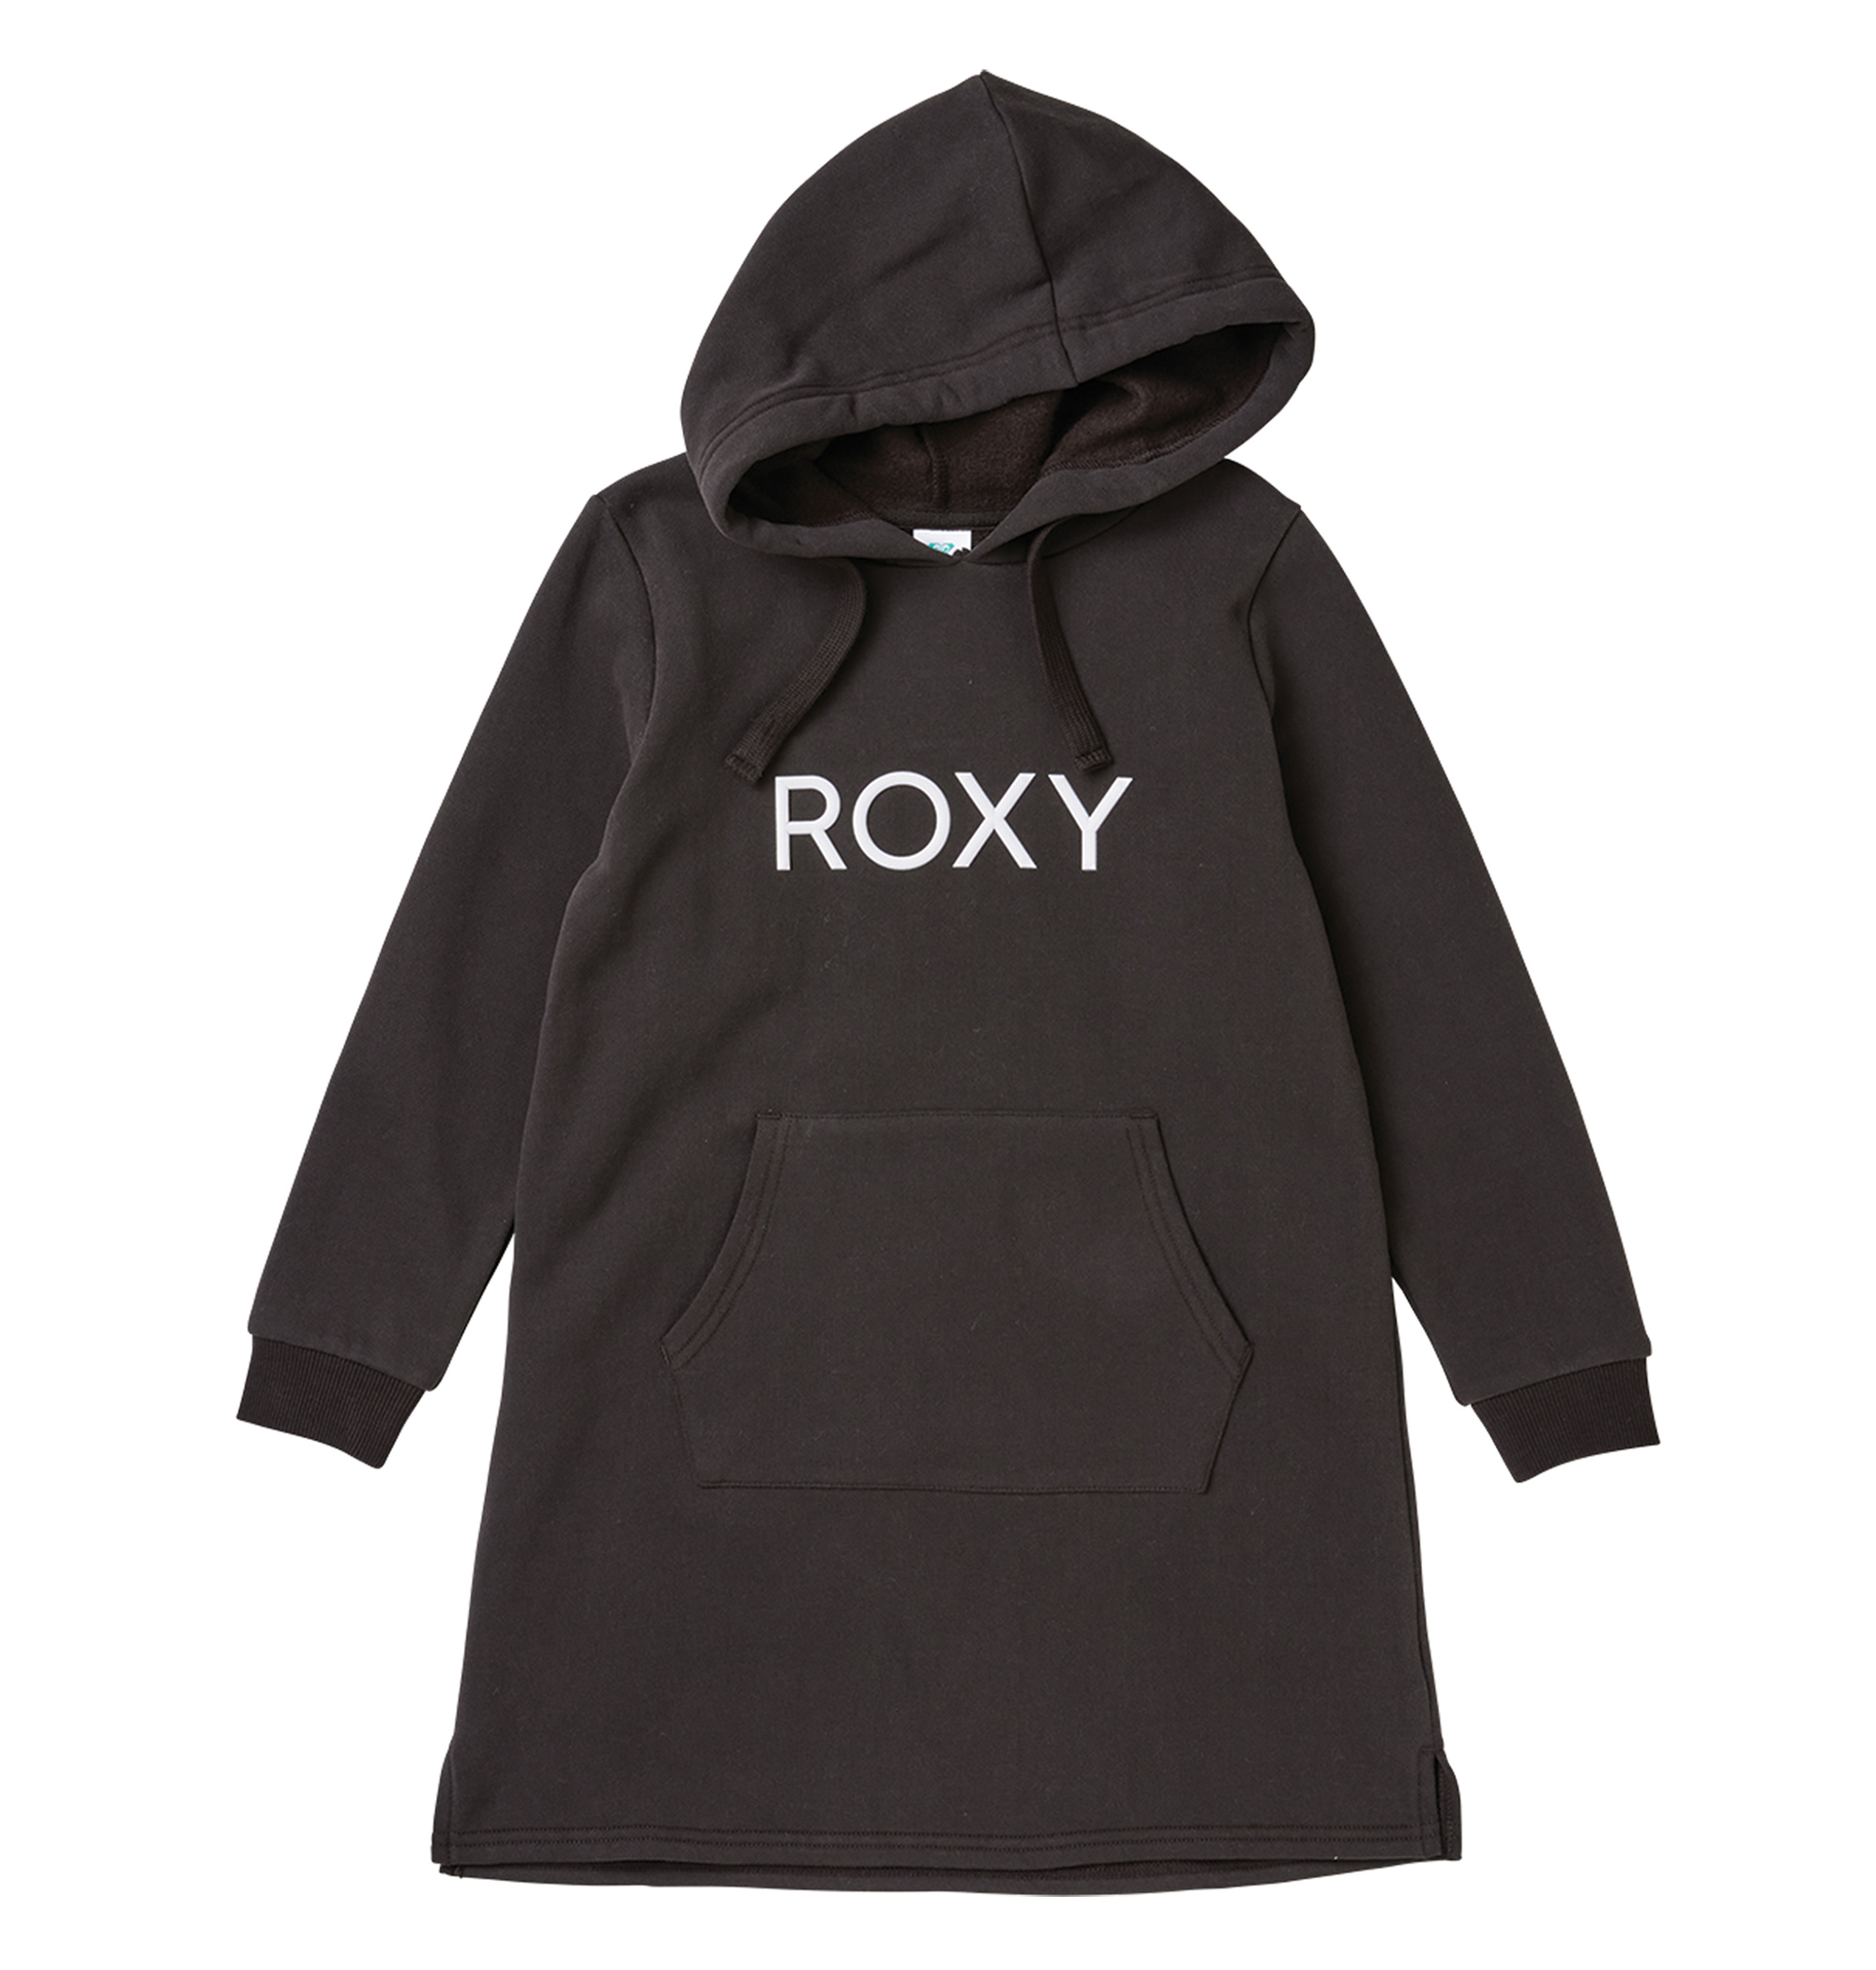 ＜Roxy＞MINI JIVY DRESS 胸元のブランドアイコンがキャッチーなフーディワンピース画像